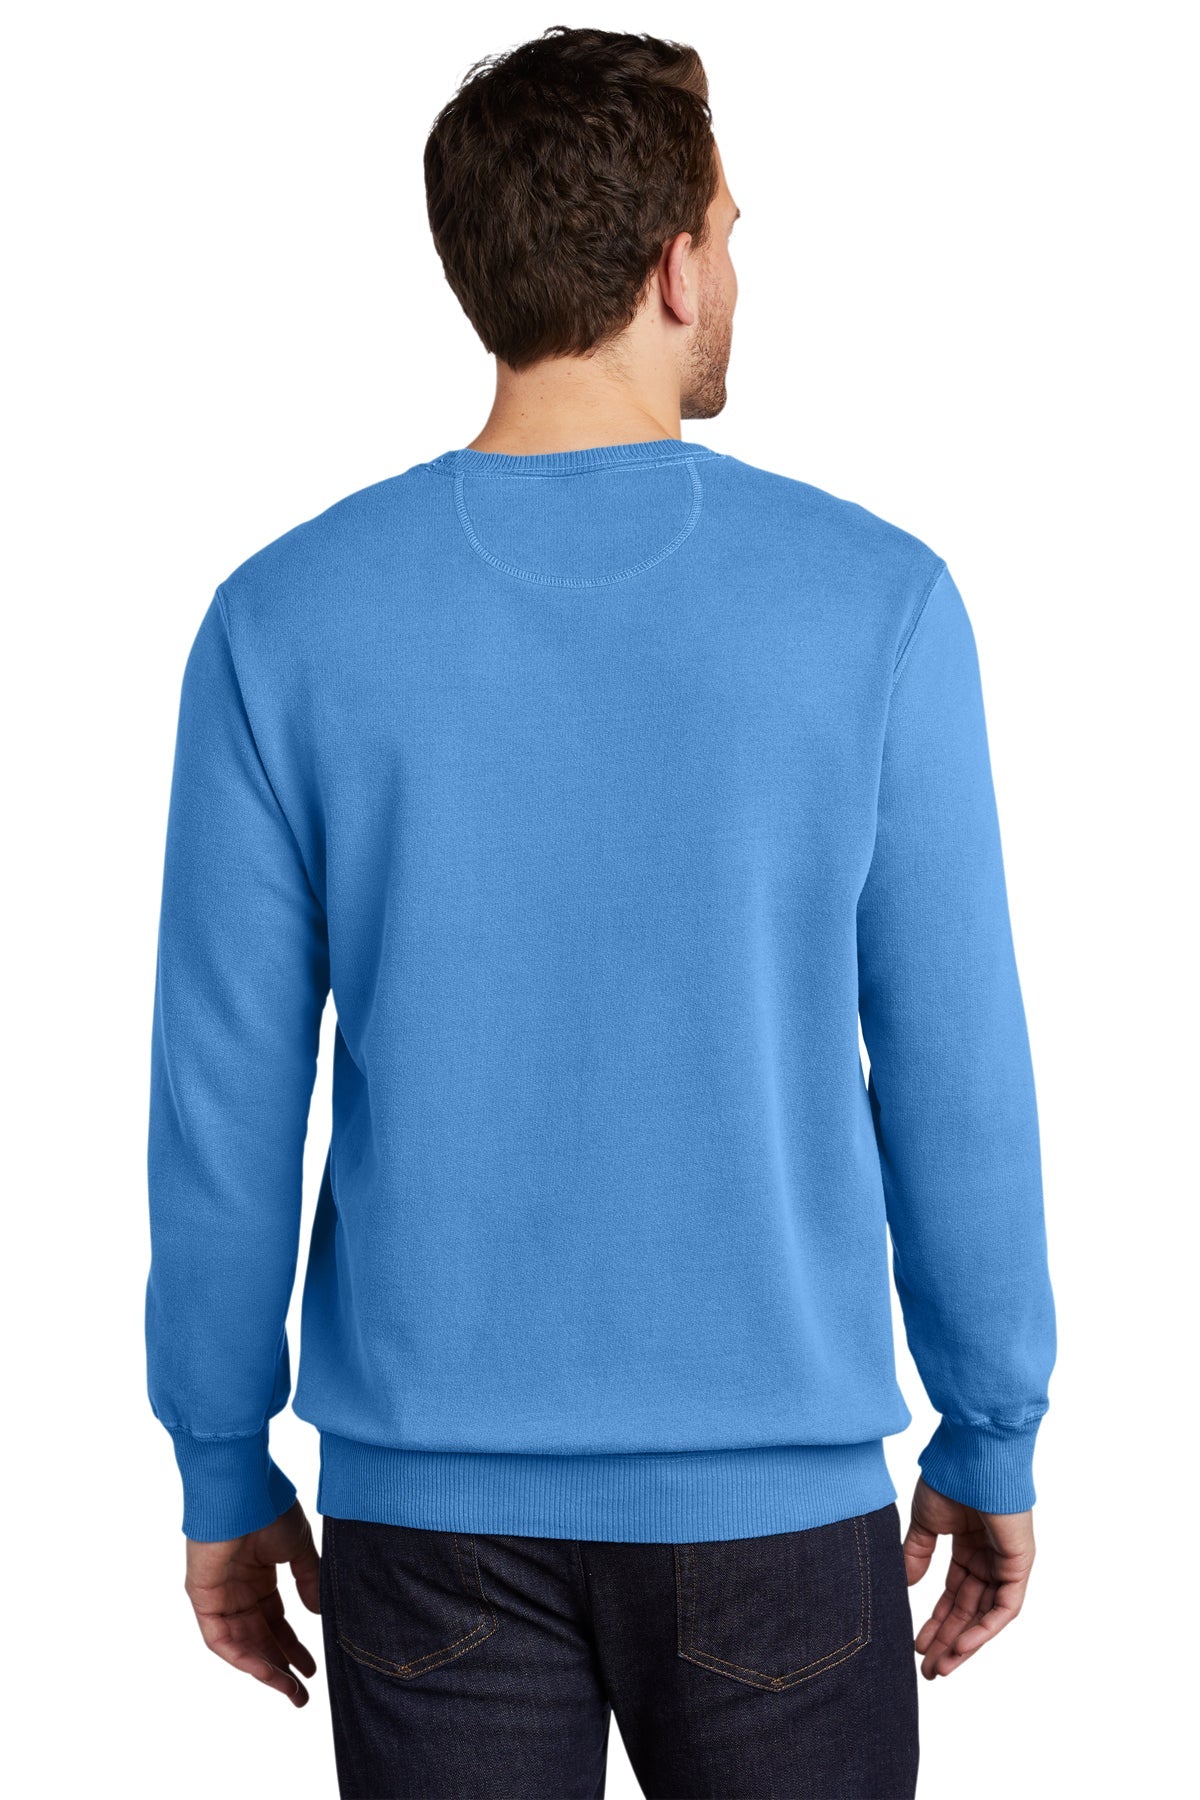 Port & Company Pigment Dyed Customized Sweatshirts, Blue Moon